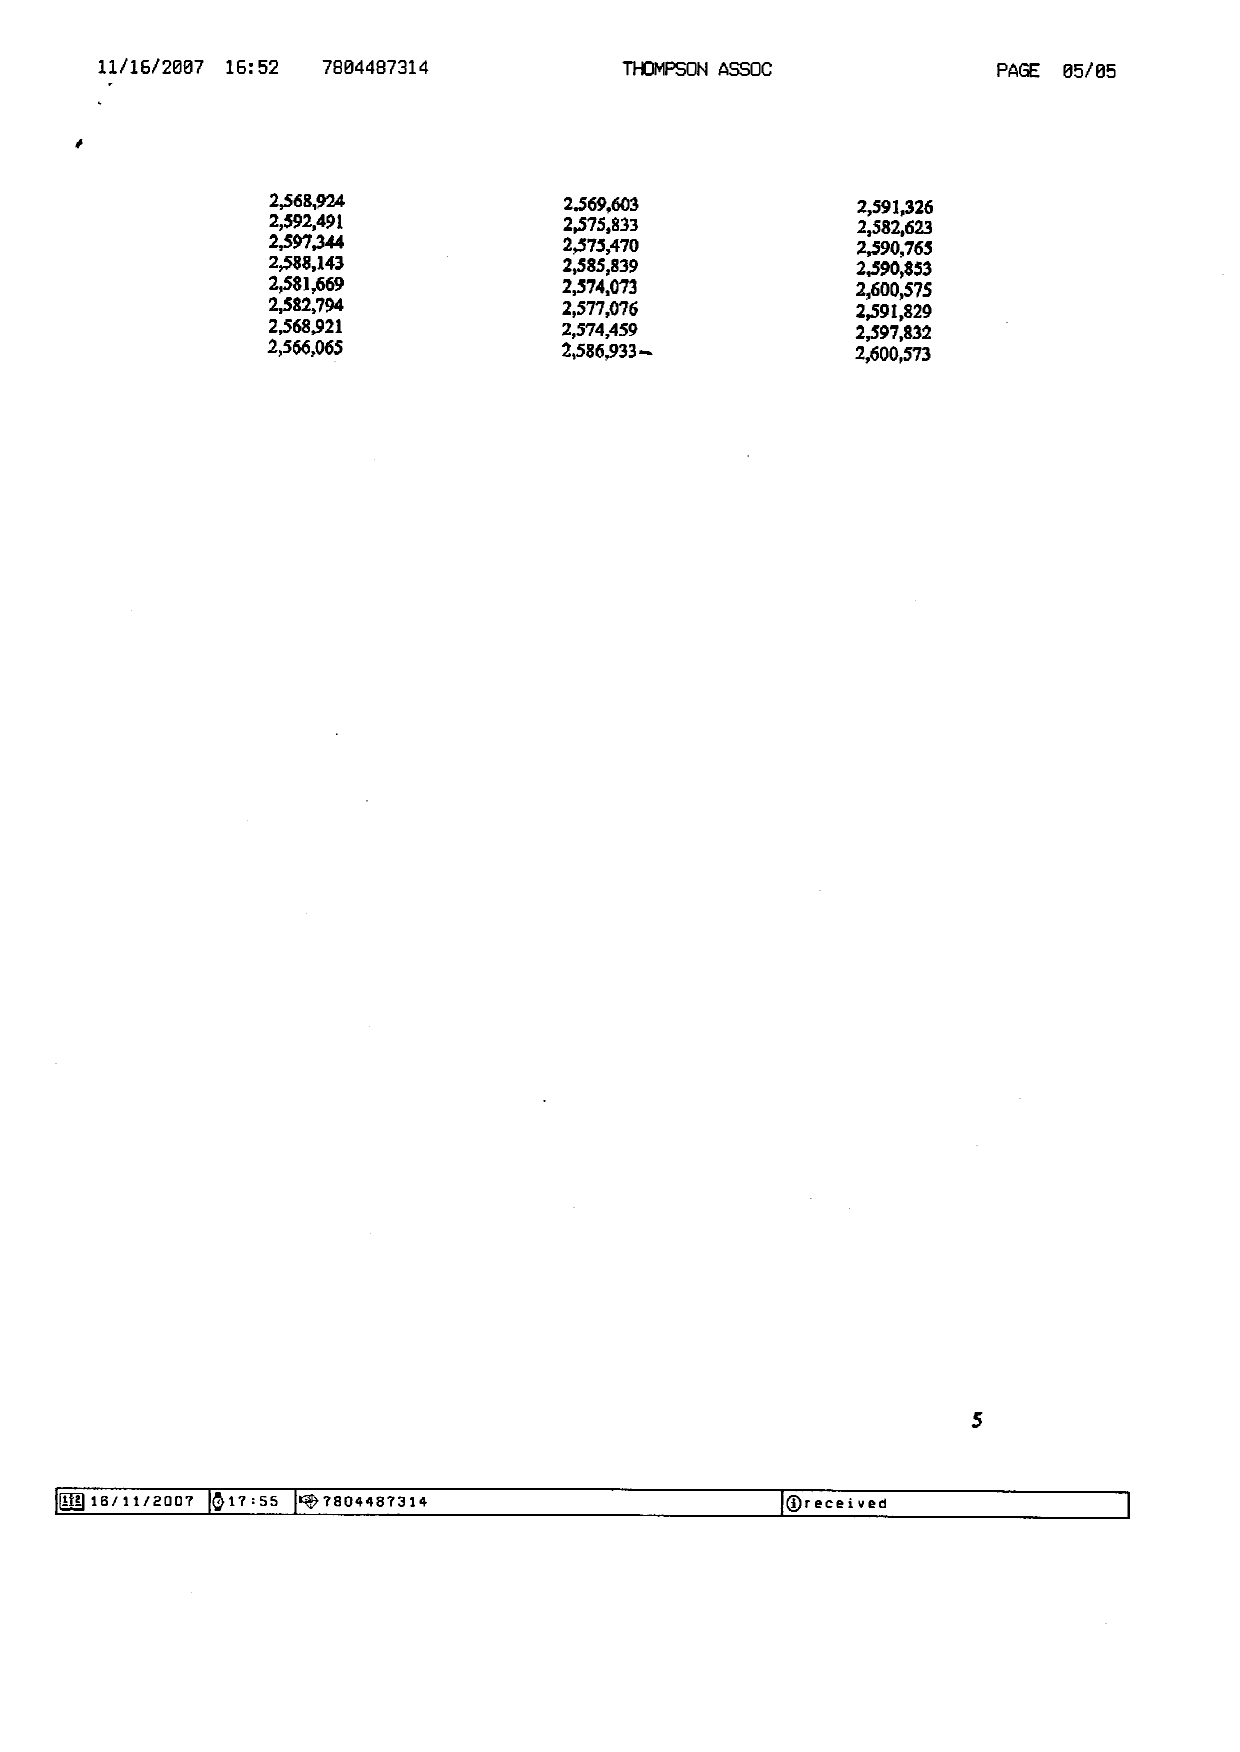 Canadian Patent Document 2304290. Correspondence 20071116. Image 5 of 5